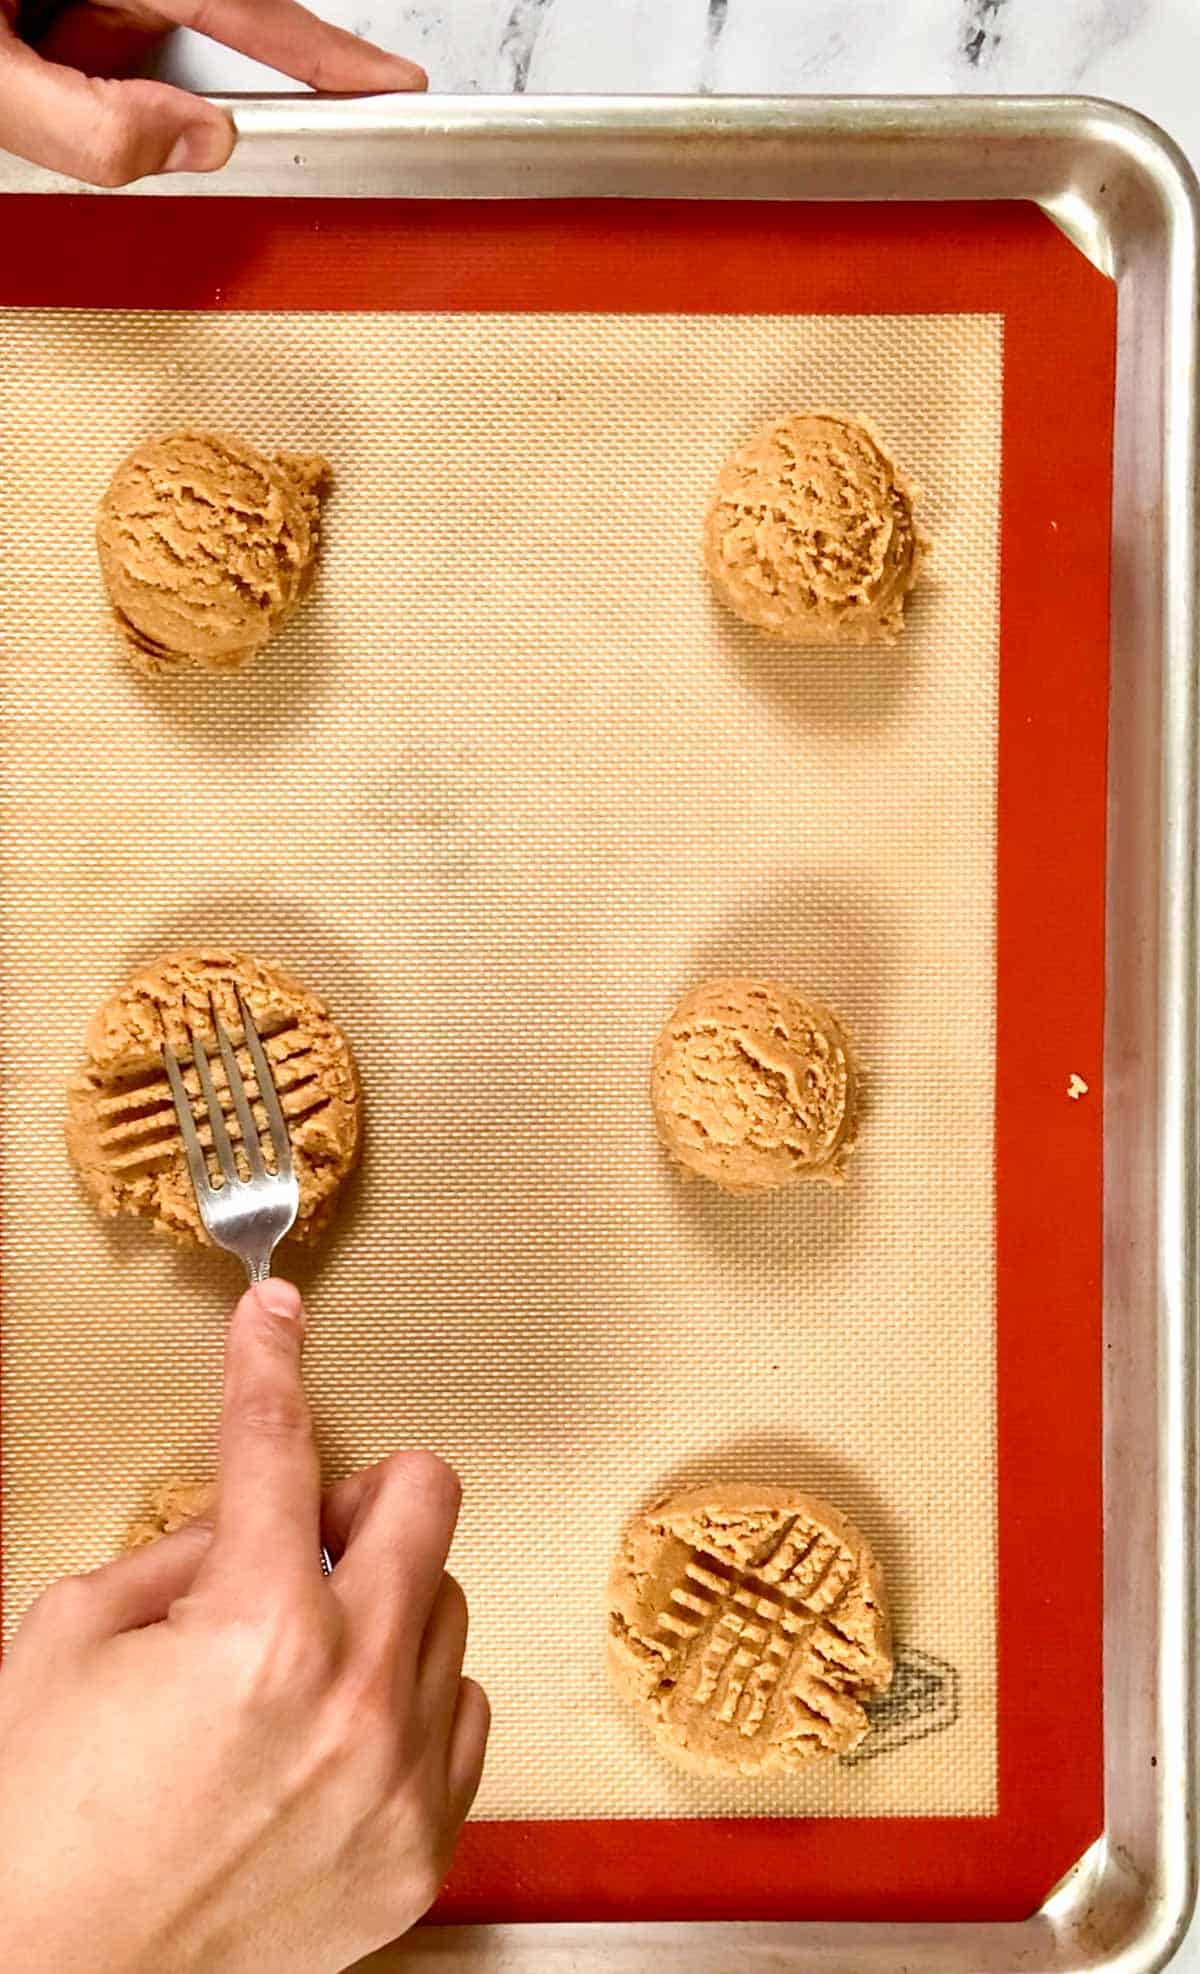 shaping the criss cross design over the almond flour peanut butter cookies dough balls.